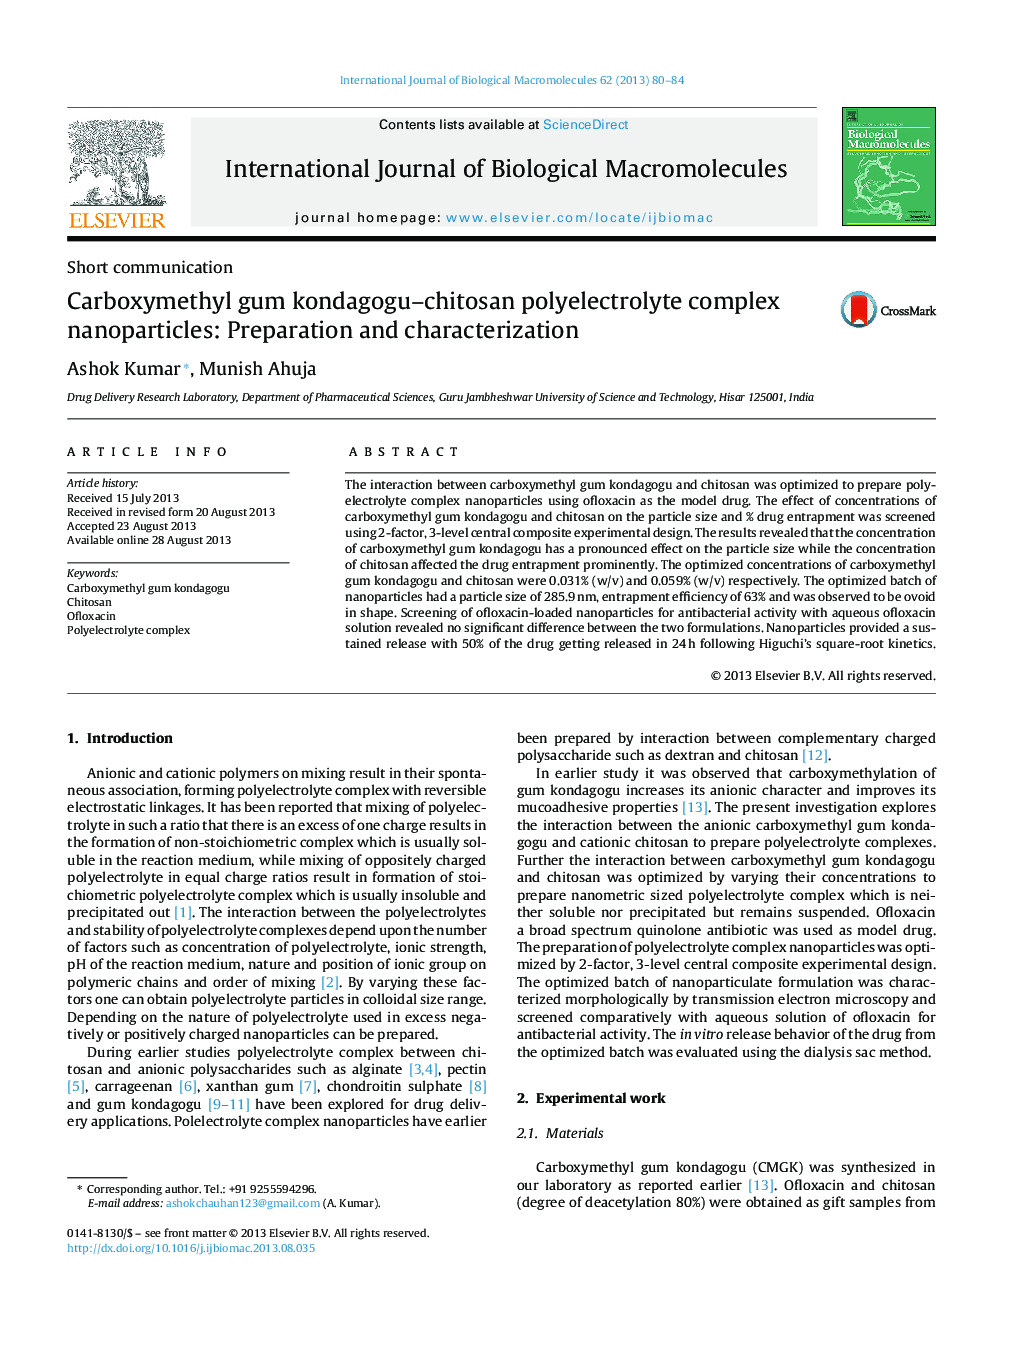 Carboxymethyl gum kondagogu-chitosan polyelectrolyte complex nanoparticles: Preparation and characterization